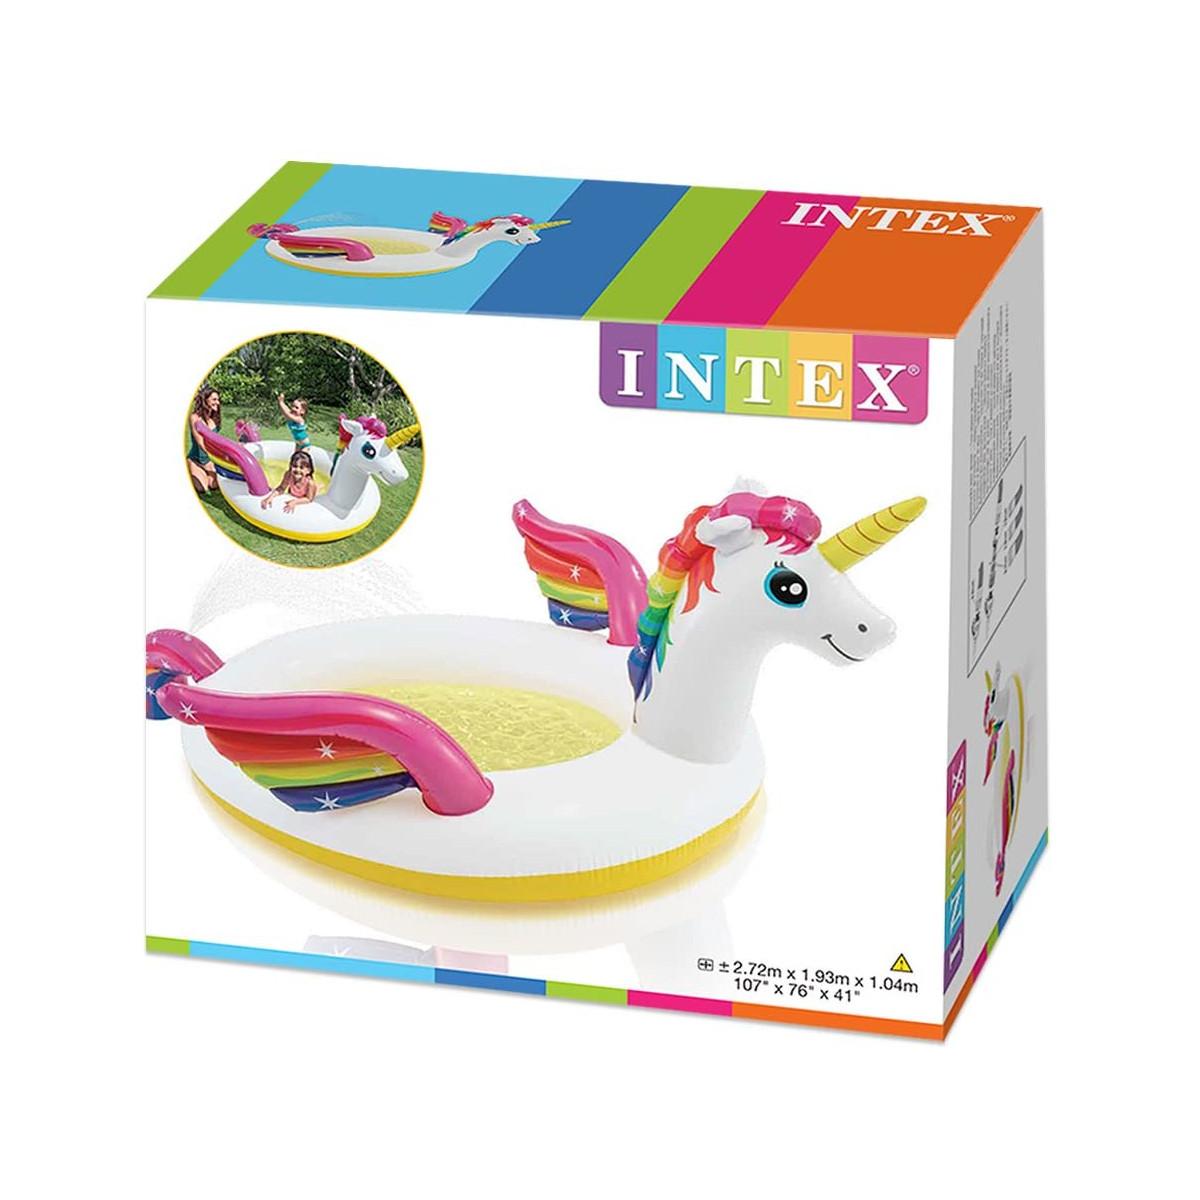 INTEX 57441NP - Baby Pool Planschbecken Reparaturflicken + (272x193x104cm) - Einhorn